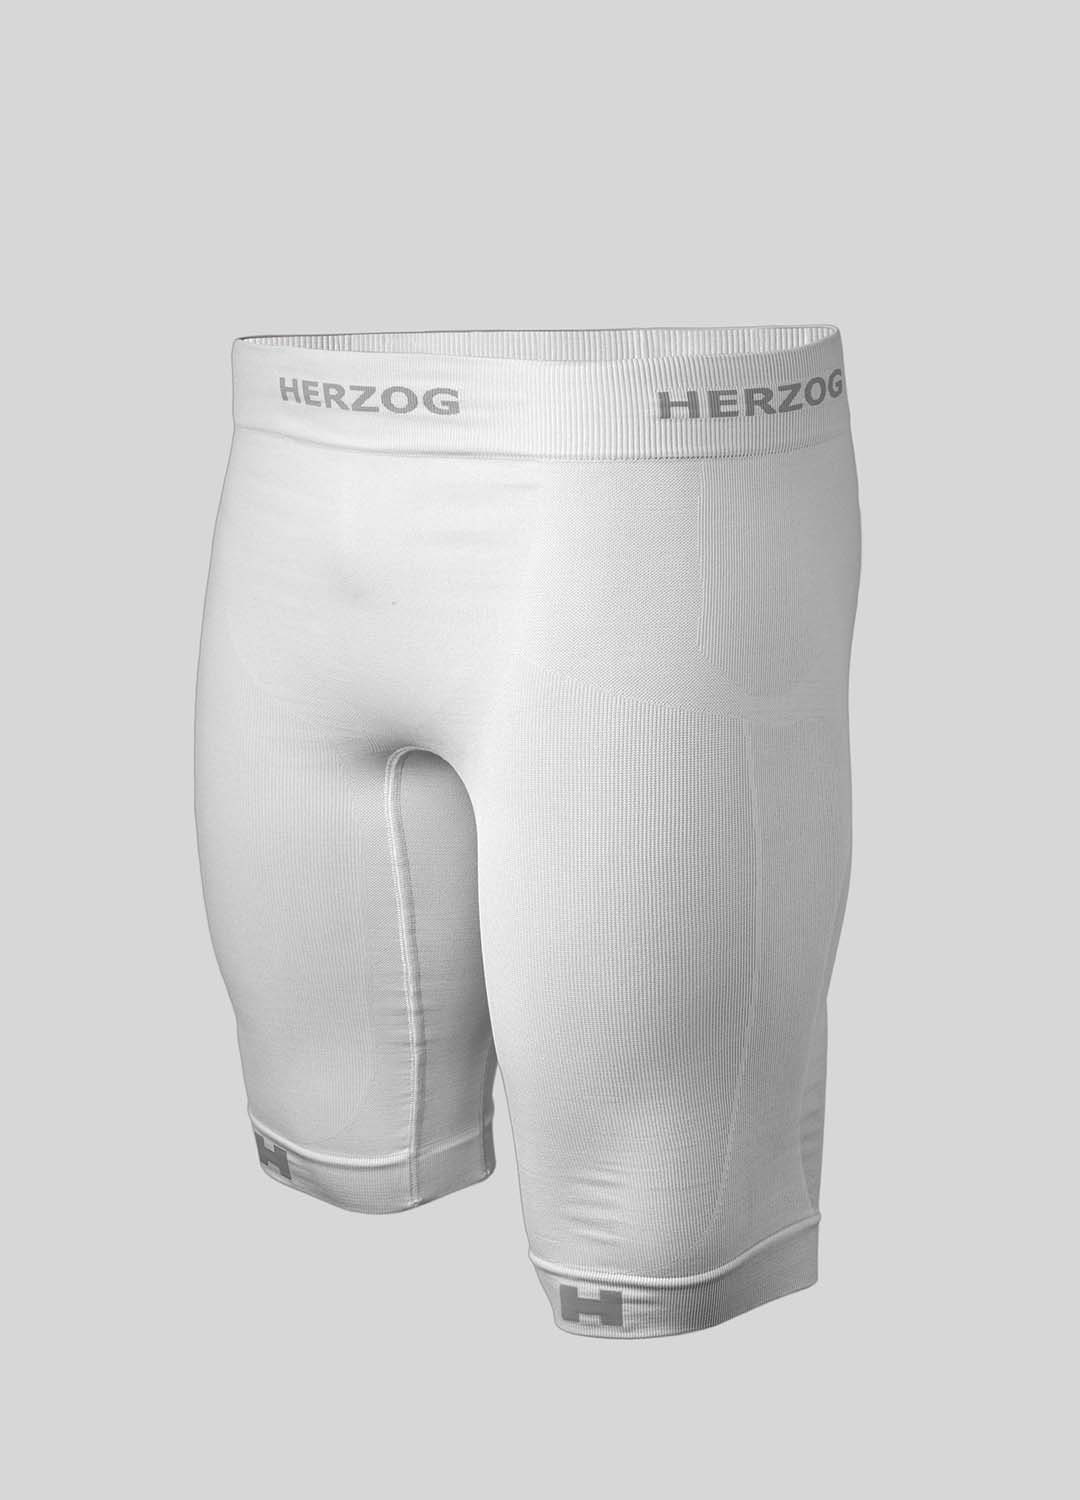 Herzog PRO Sport Compression Shorts